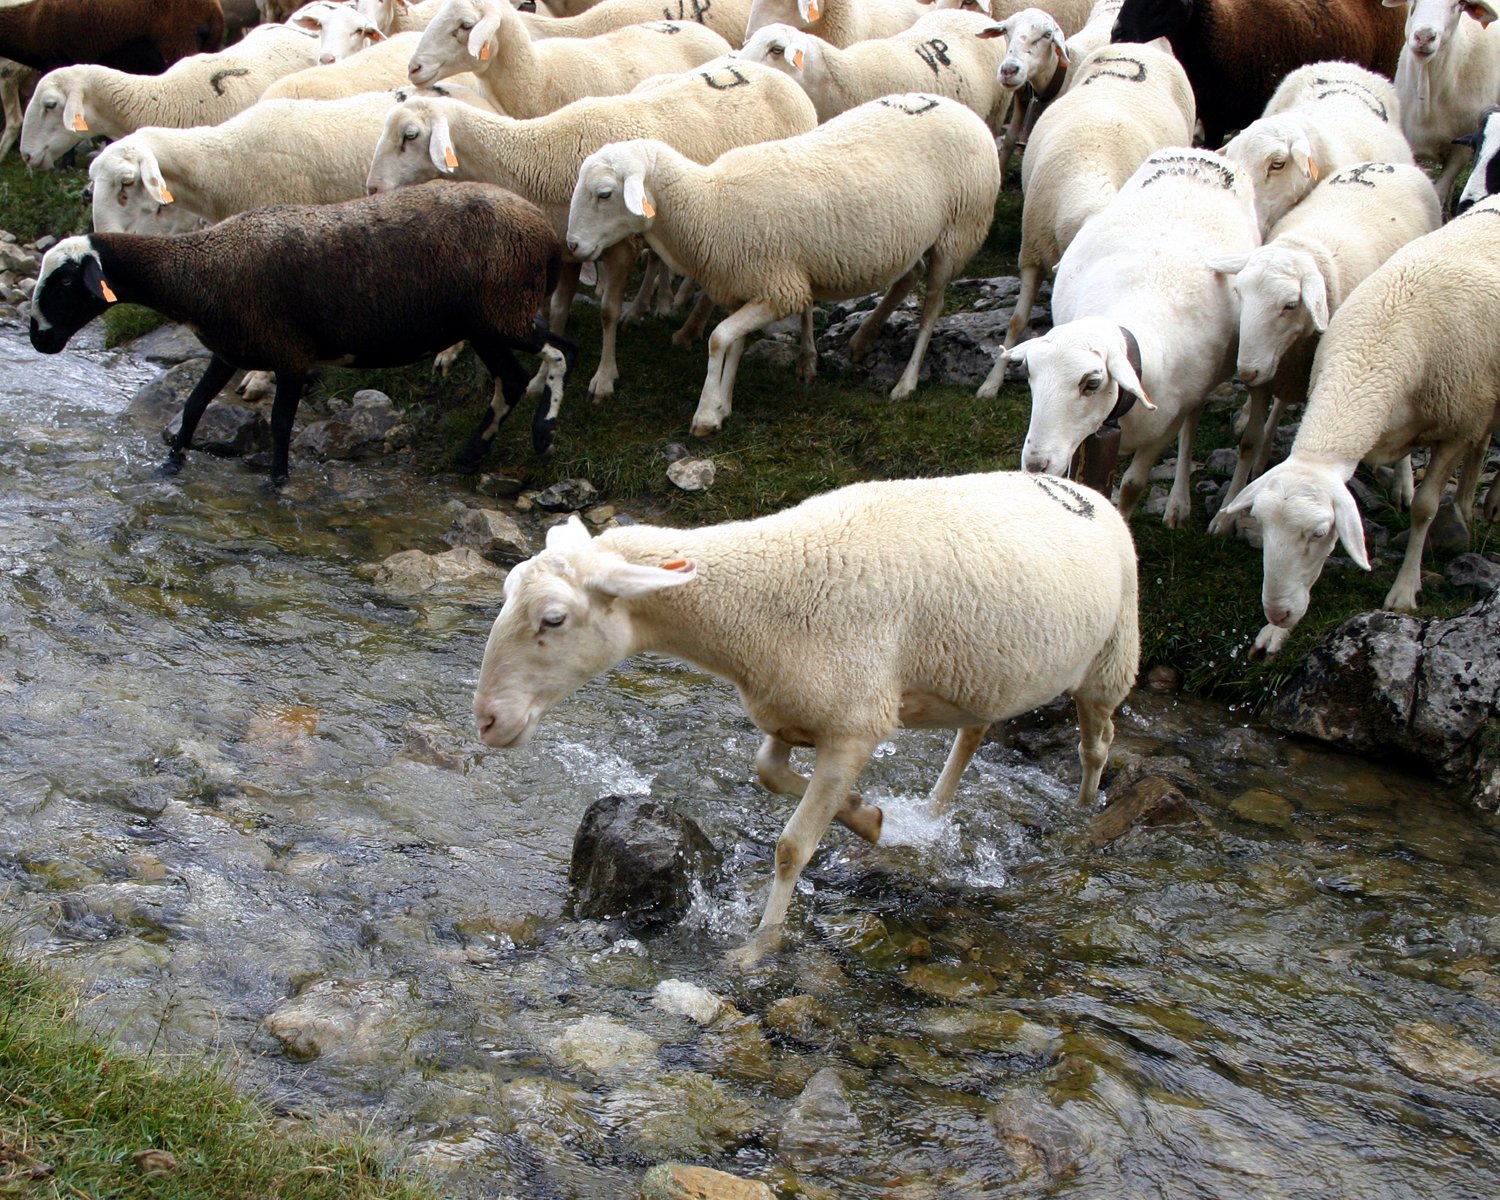 several sheep walking through some shallow water